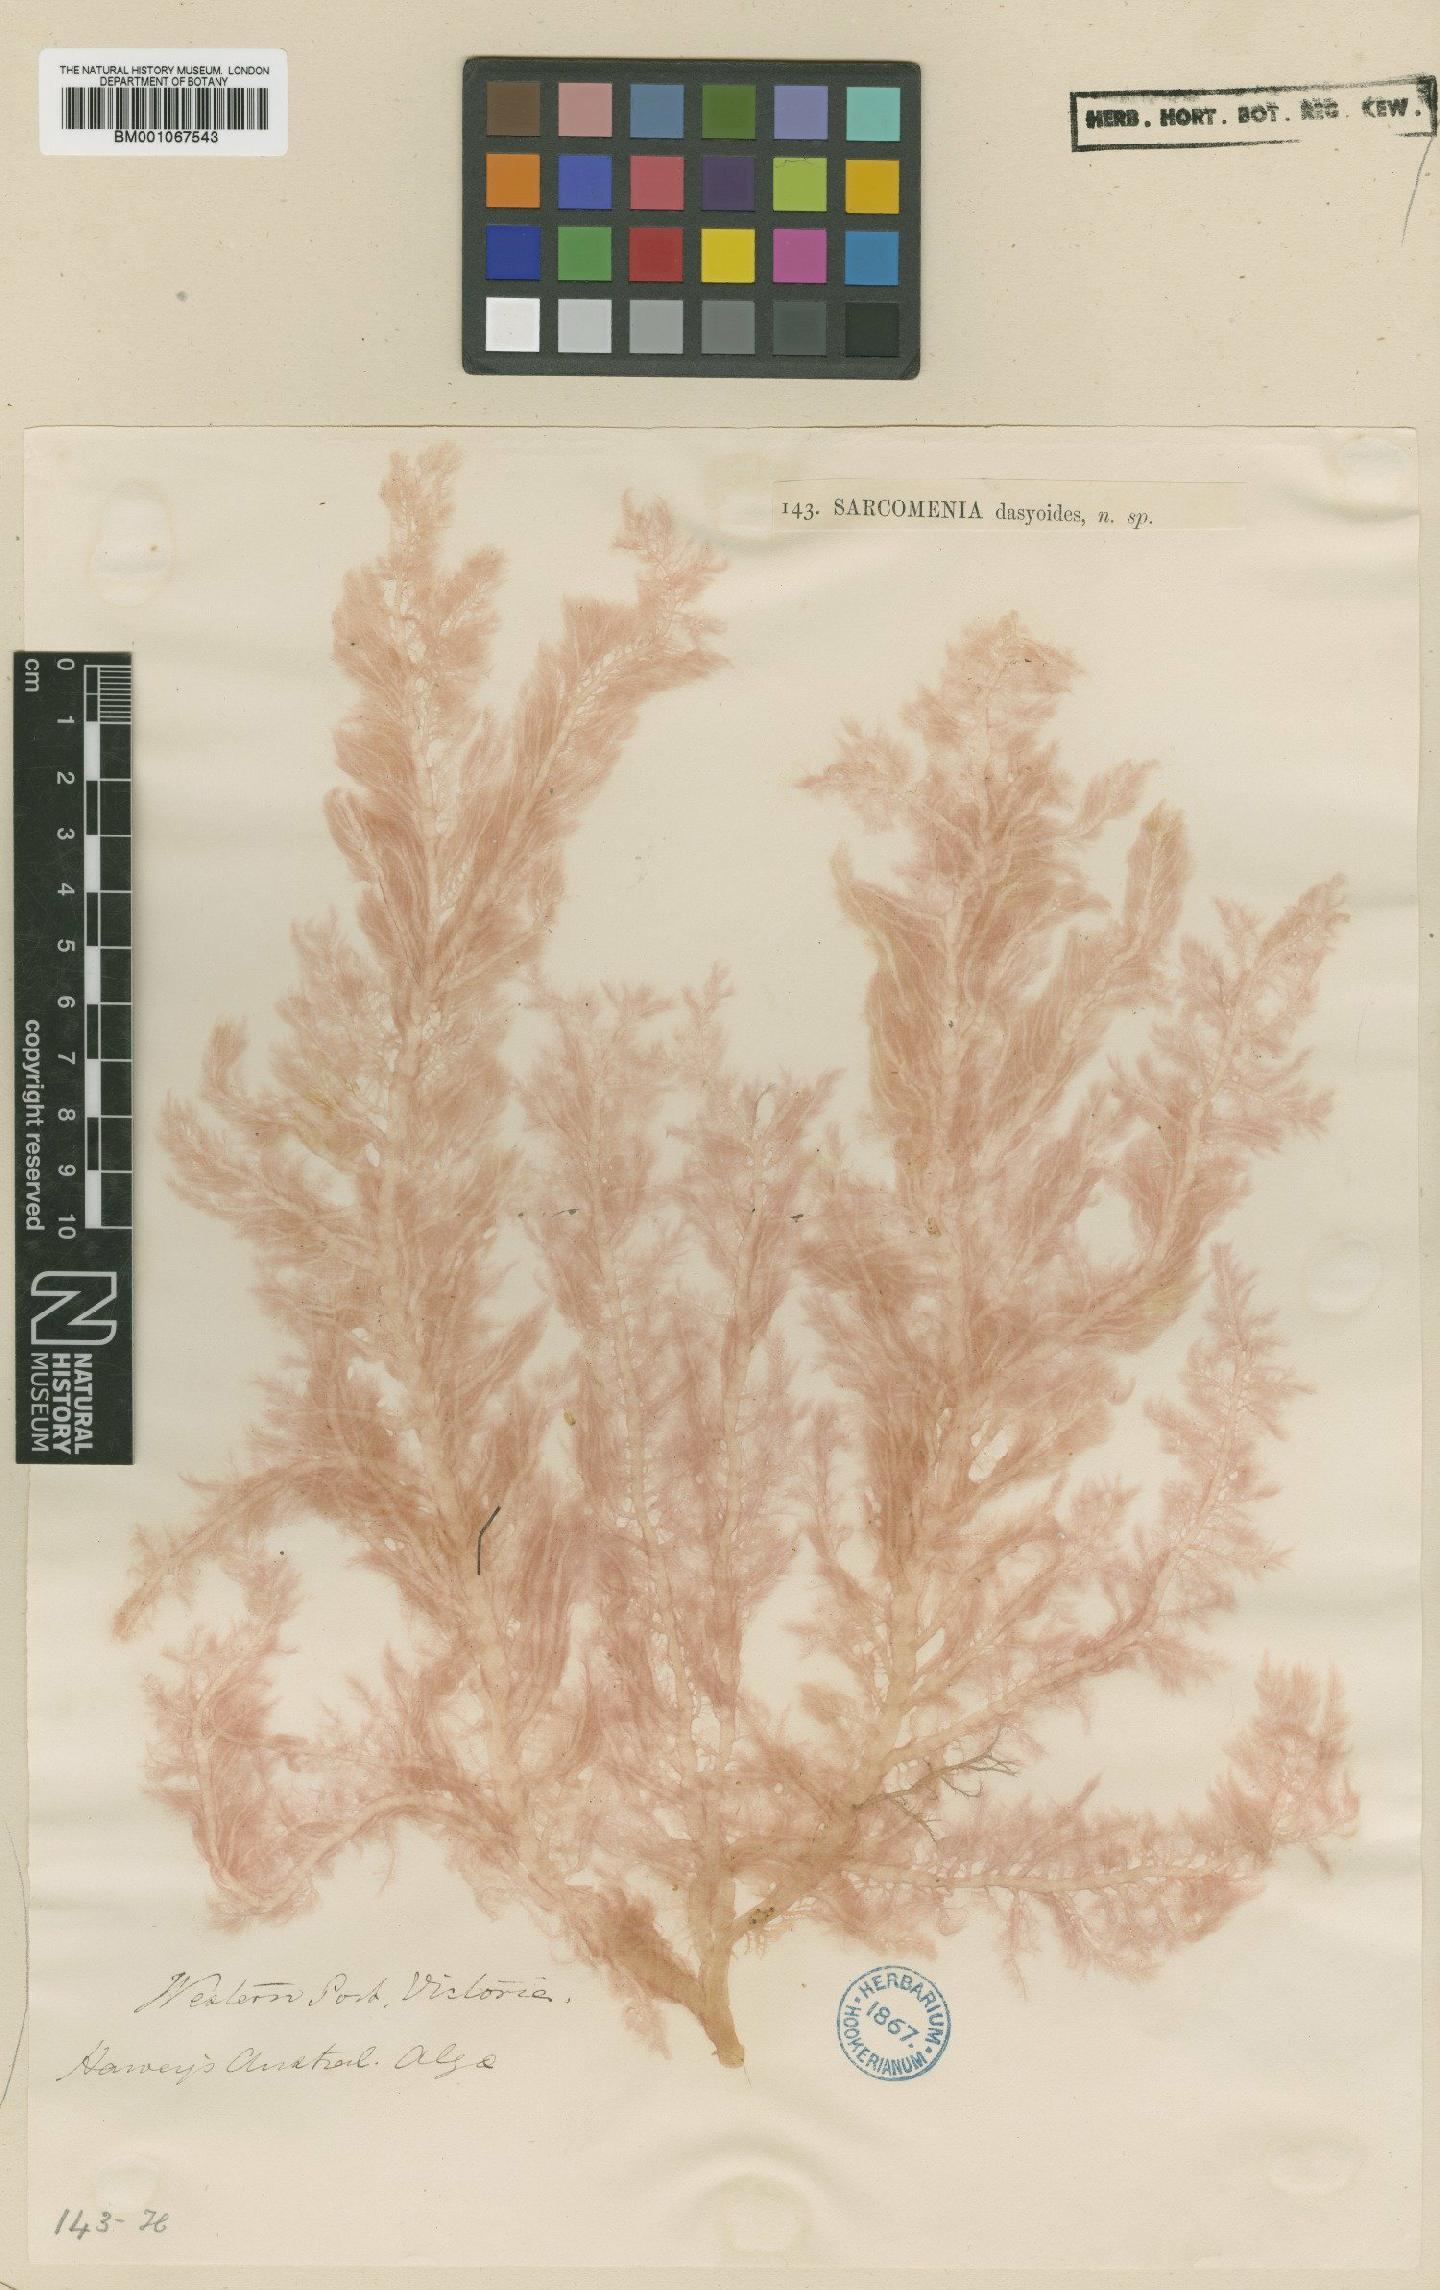 To NHMUK collection (Platysiphonia victoriae (Harv. ex J.Agardh) Shepley & Womersley; NHMUK:ecatalogue:2301526)